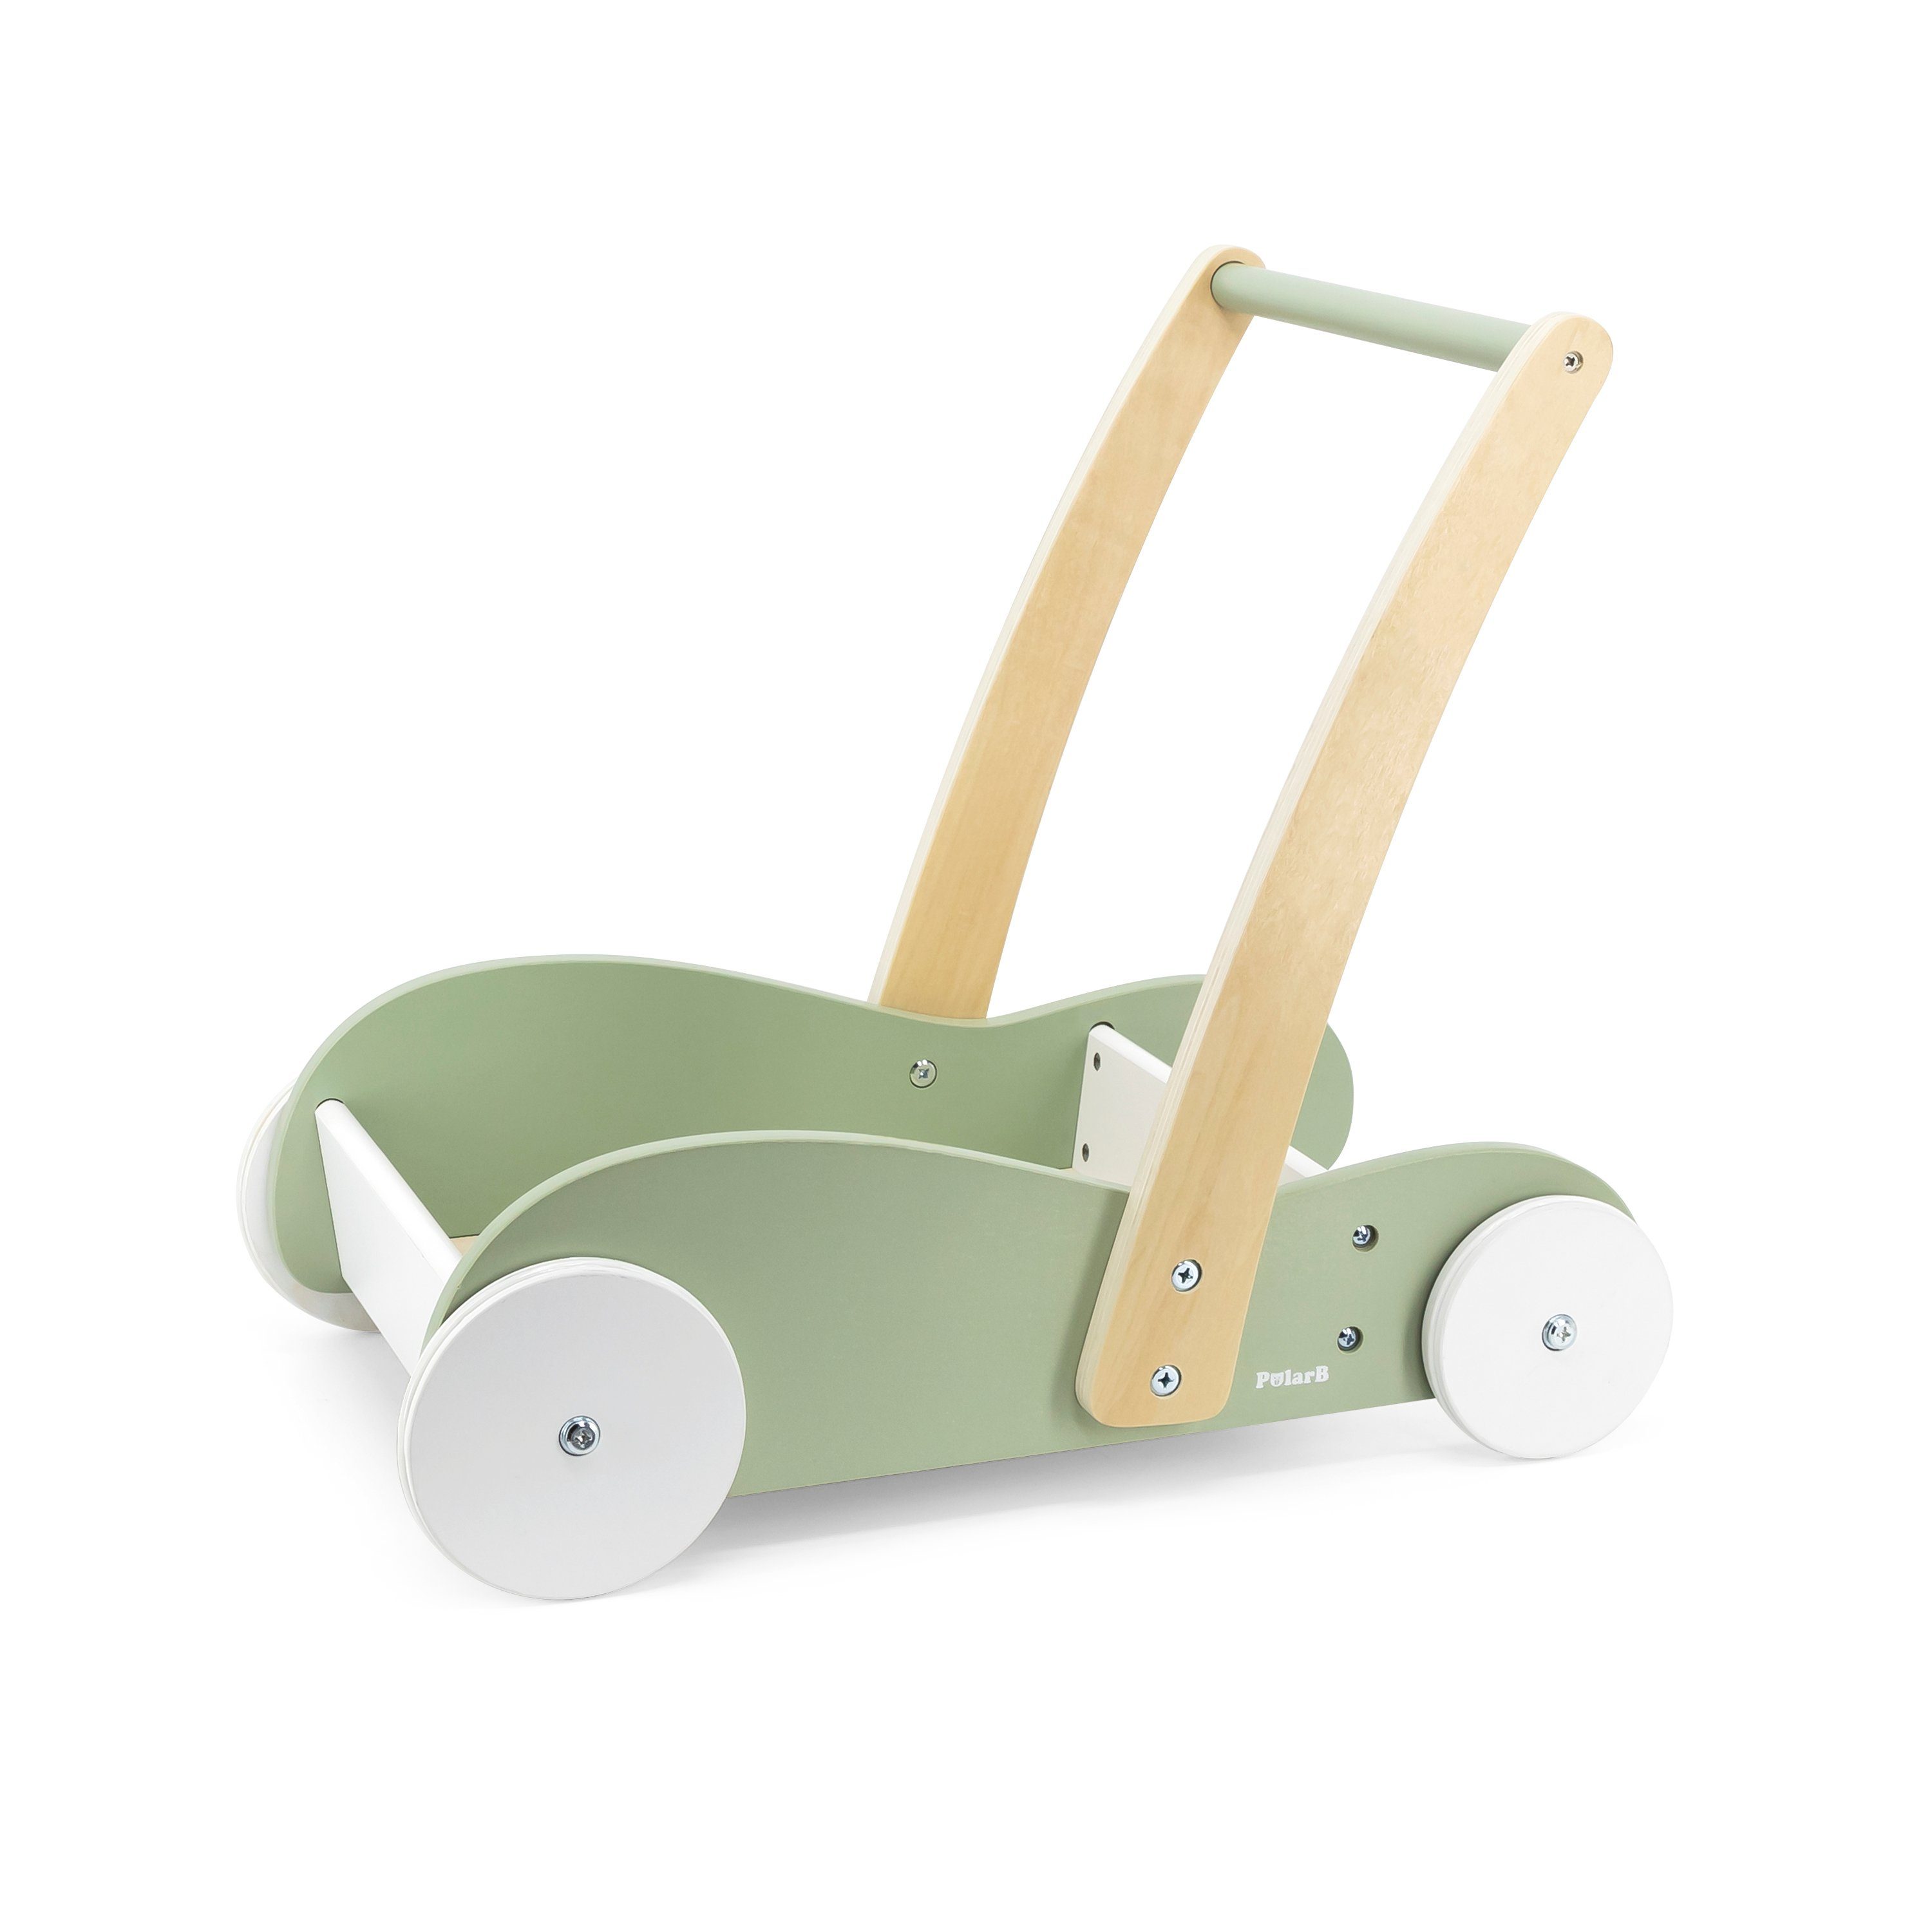 LeNoSa Lauflernwagen PolarB Holz Lauflernhilfe Walker Mint • Baby